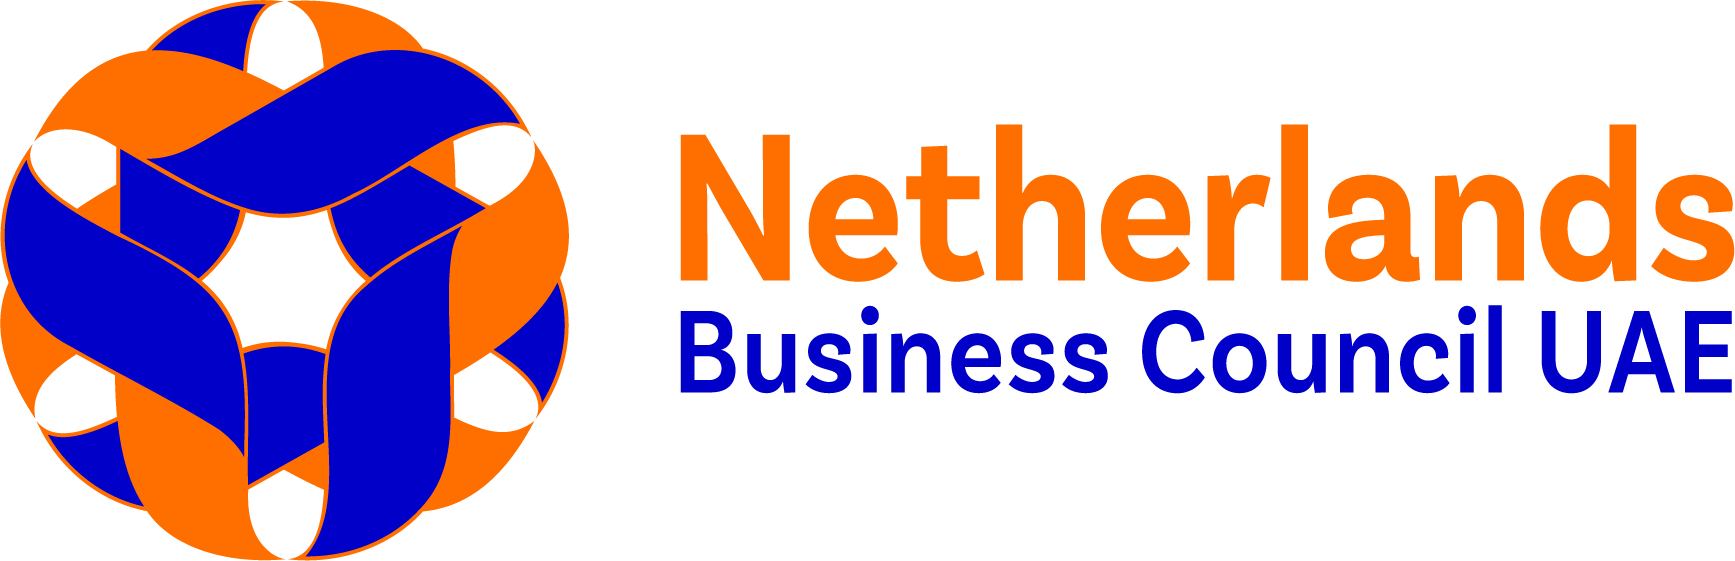 Netherlands Business Council UAE